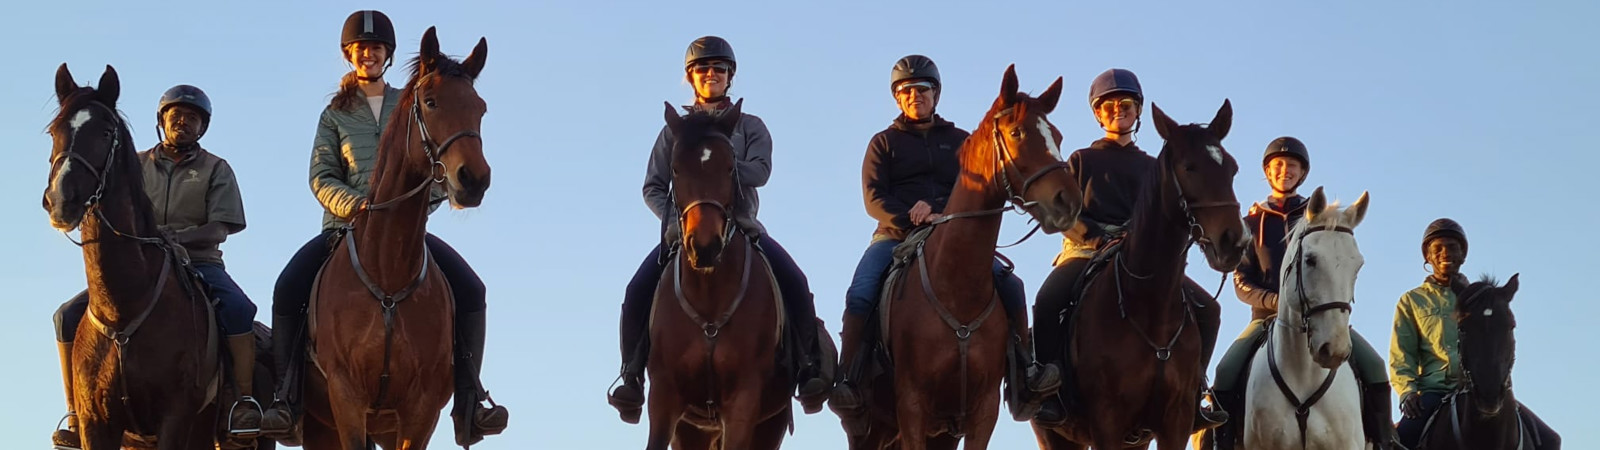 Rianne’s top 7 moments from the saddle – Tuli Horse Safari